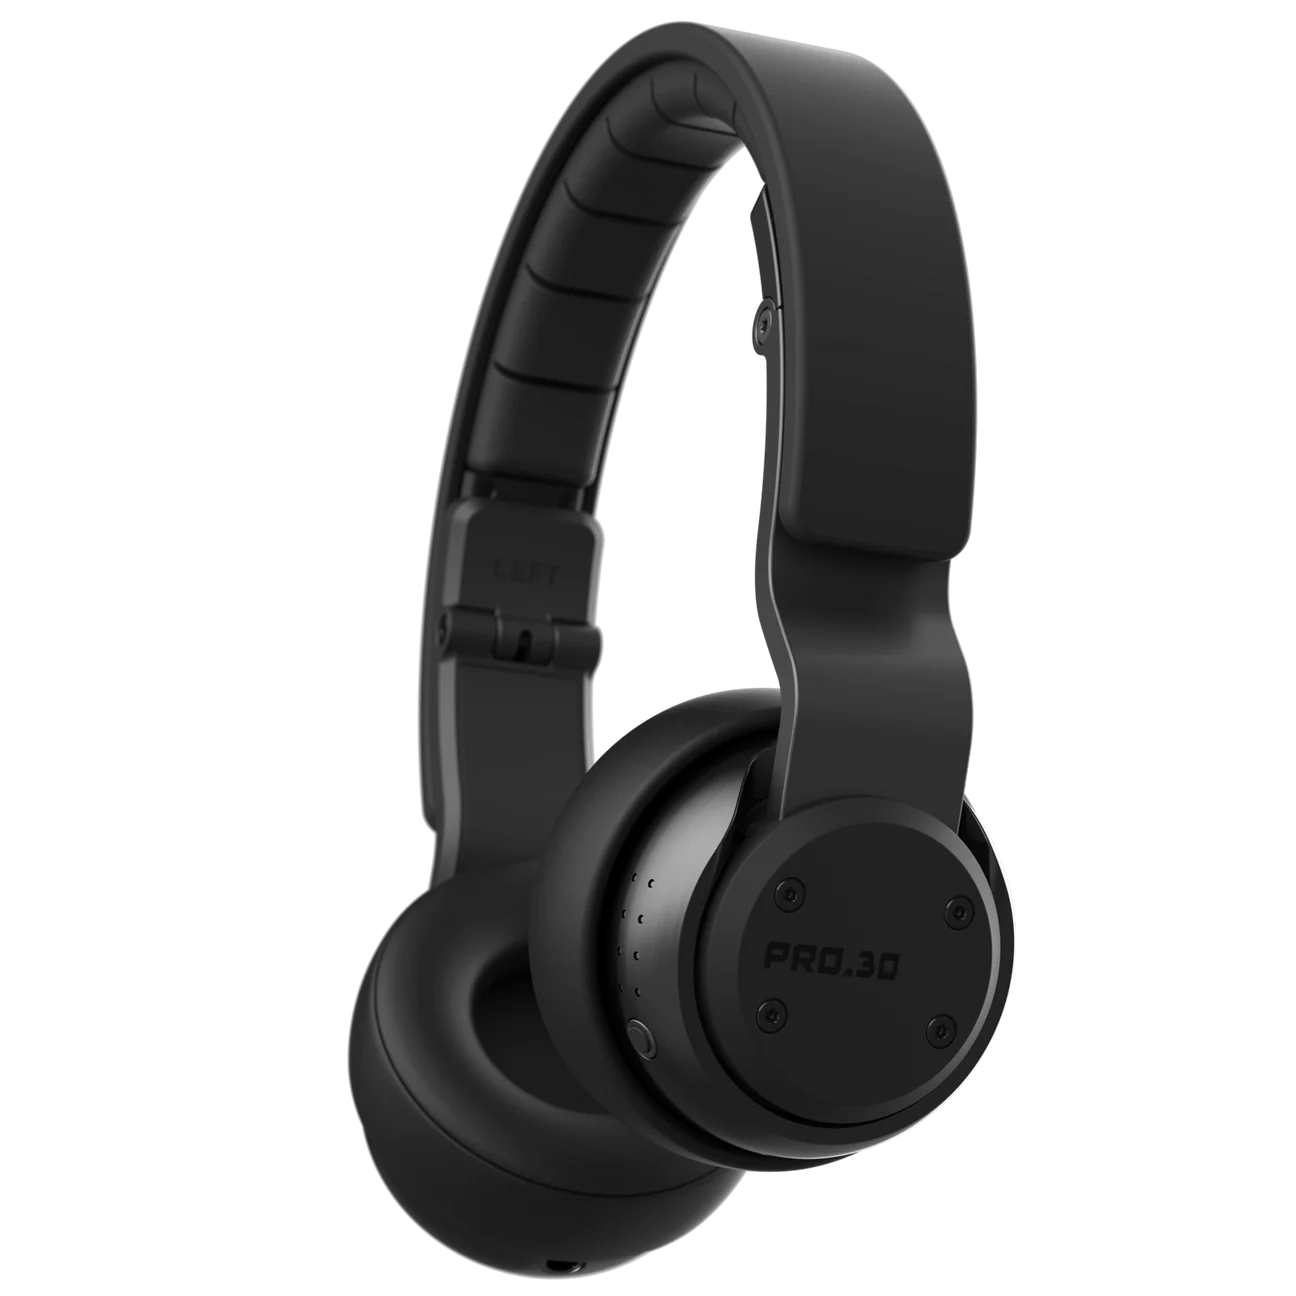 PRO30 Wireless Tactical Gaming Headphones